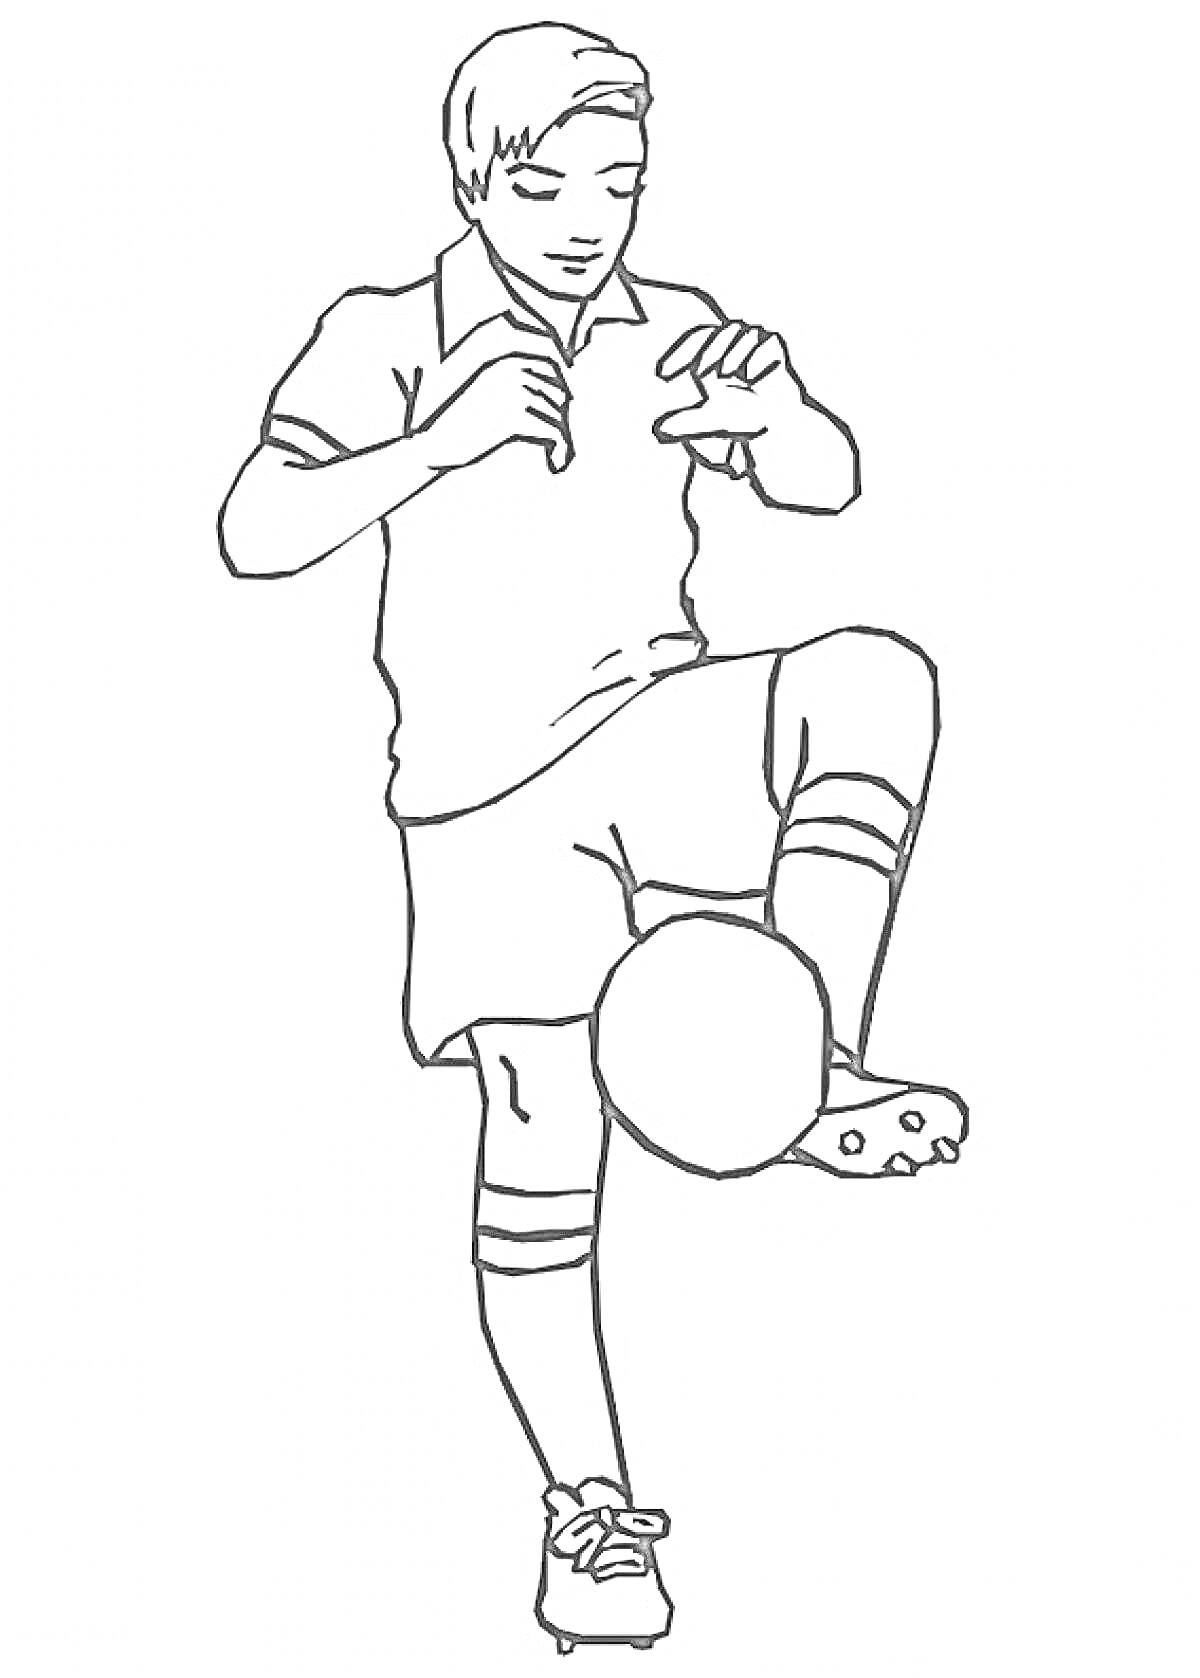 Футболист, выполняющий чеканку мяча